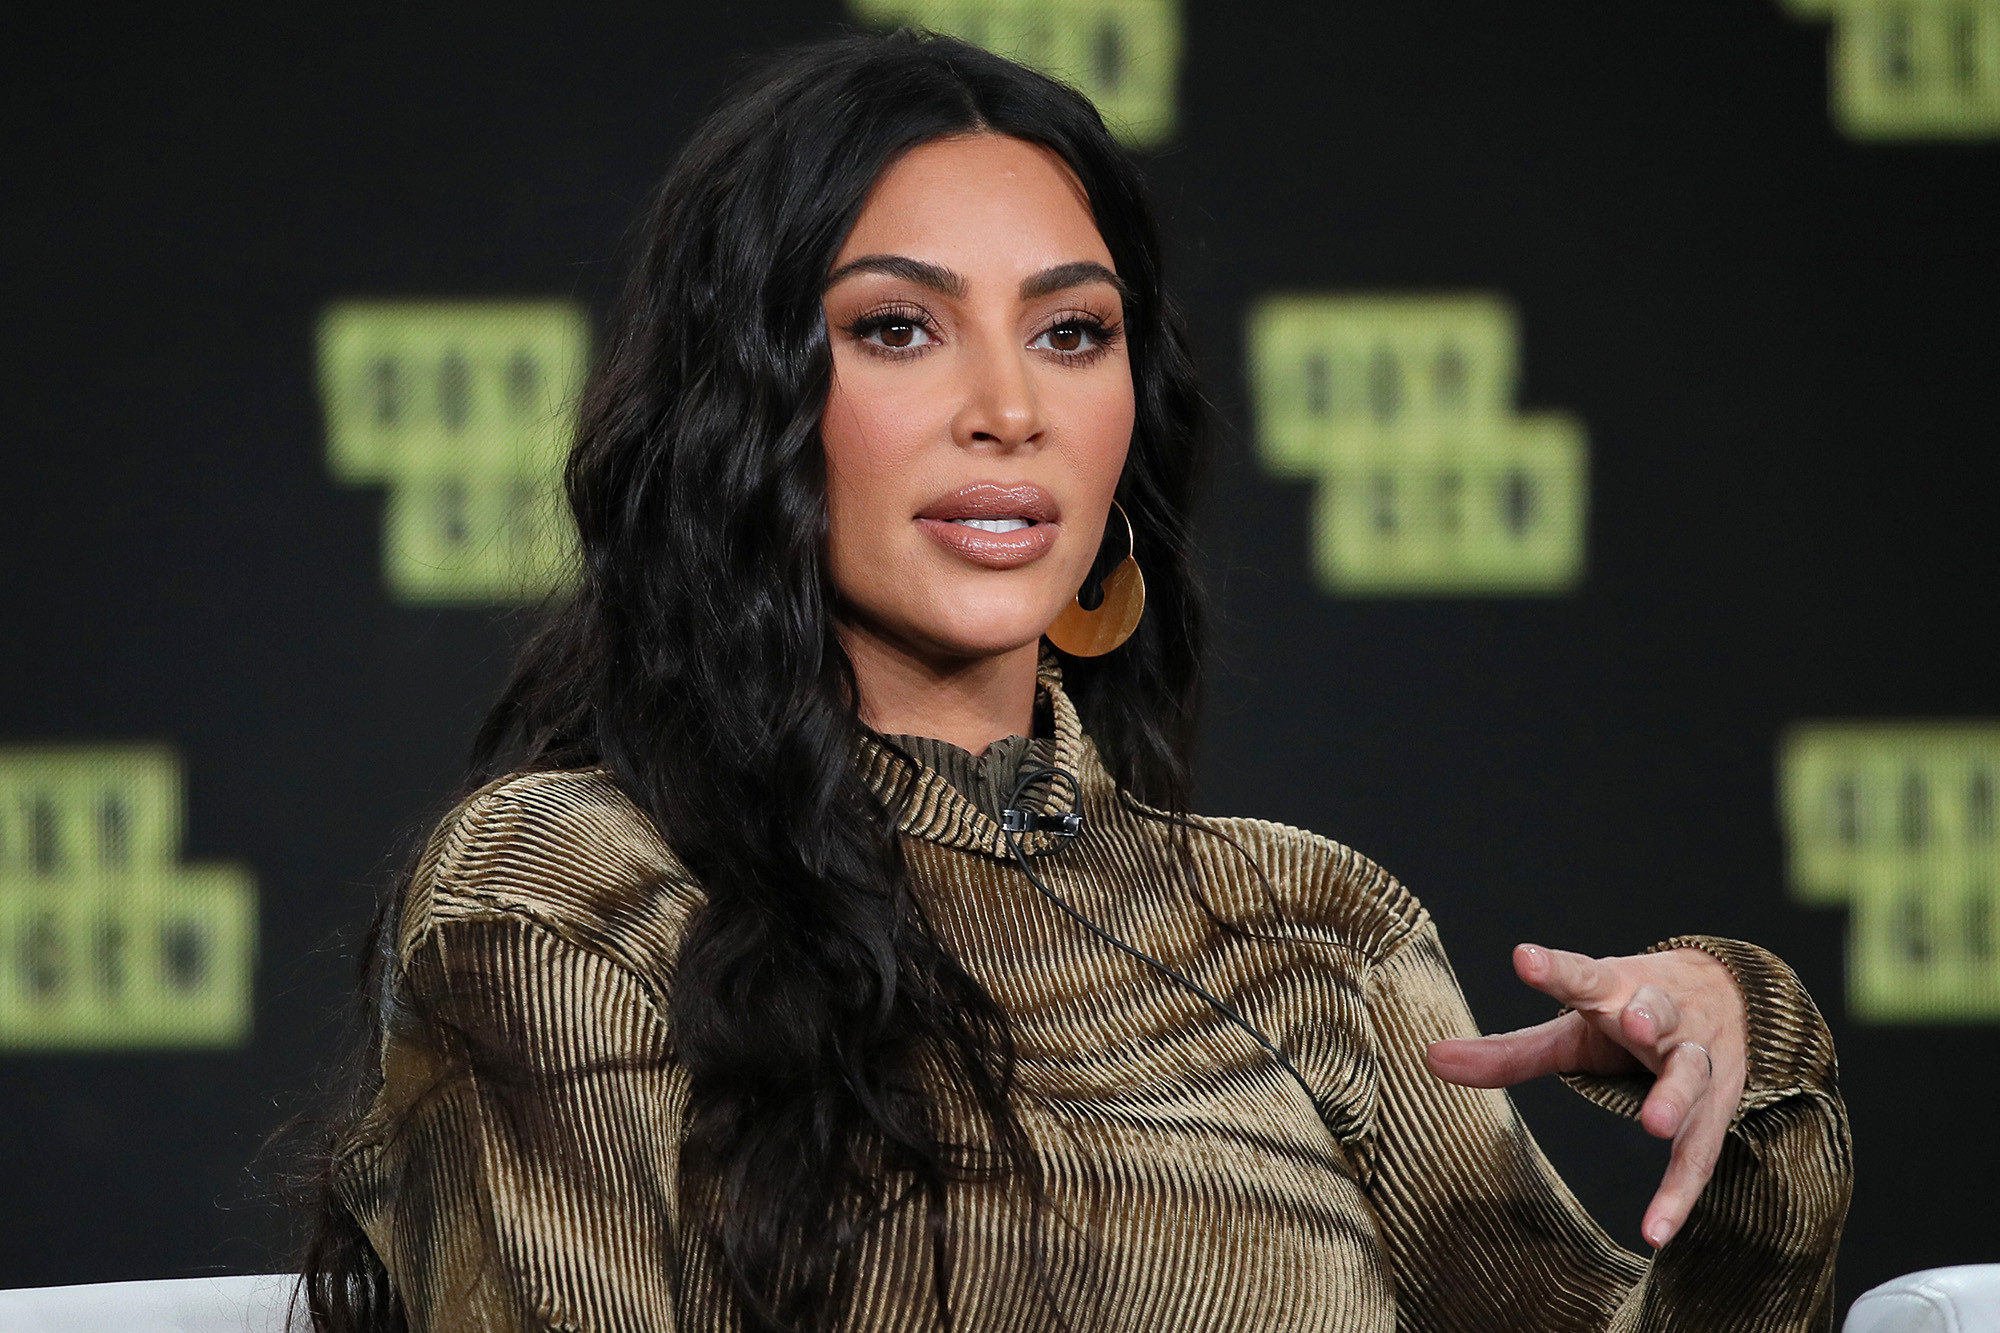 Spotify nab Kim Kardashian West for their latest exclusive podcast series